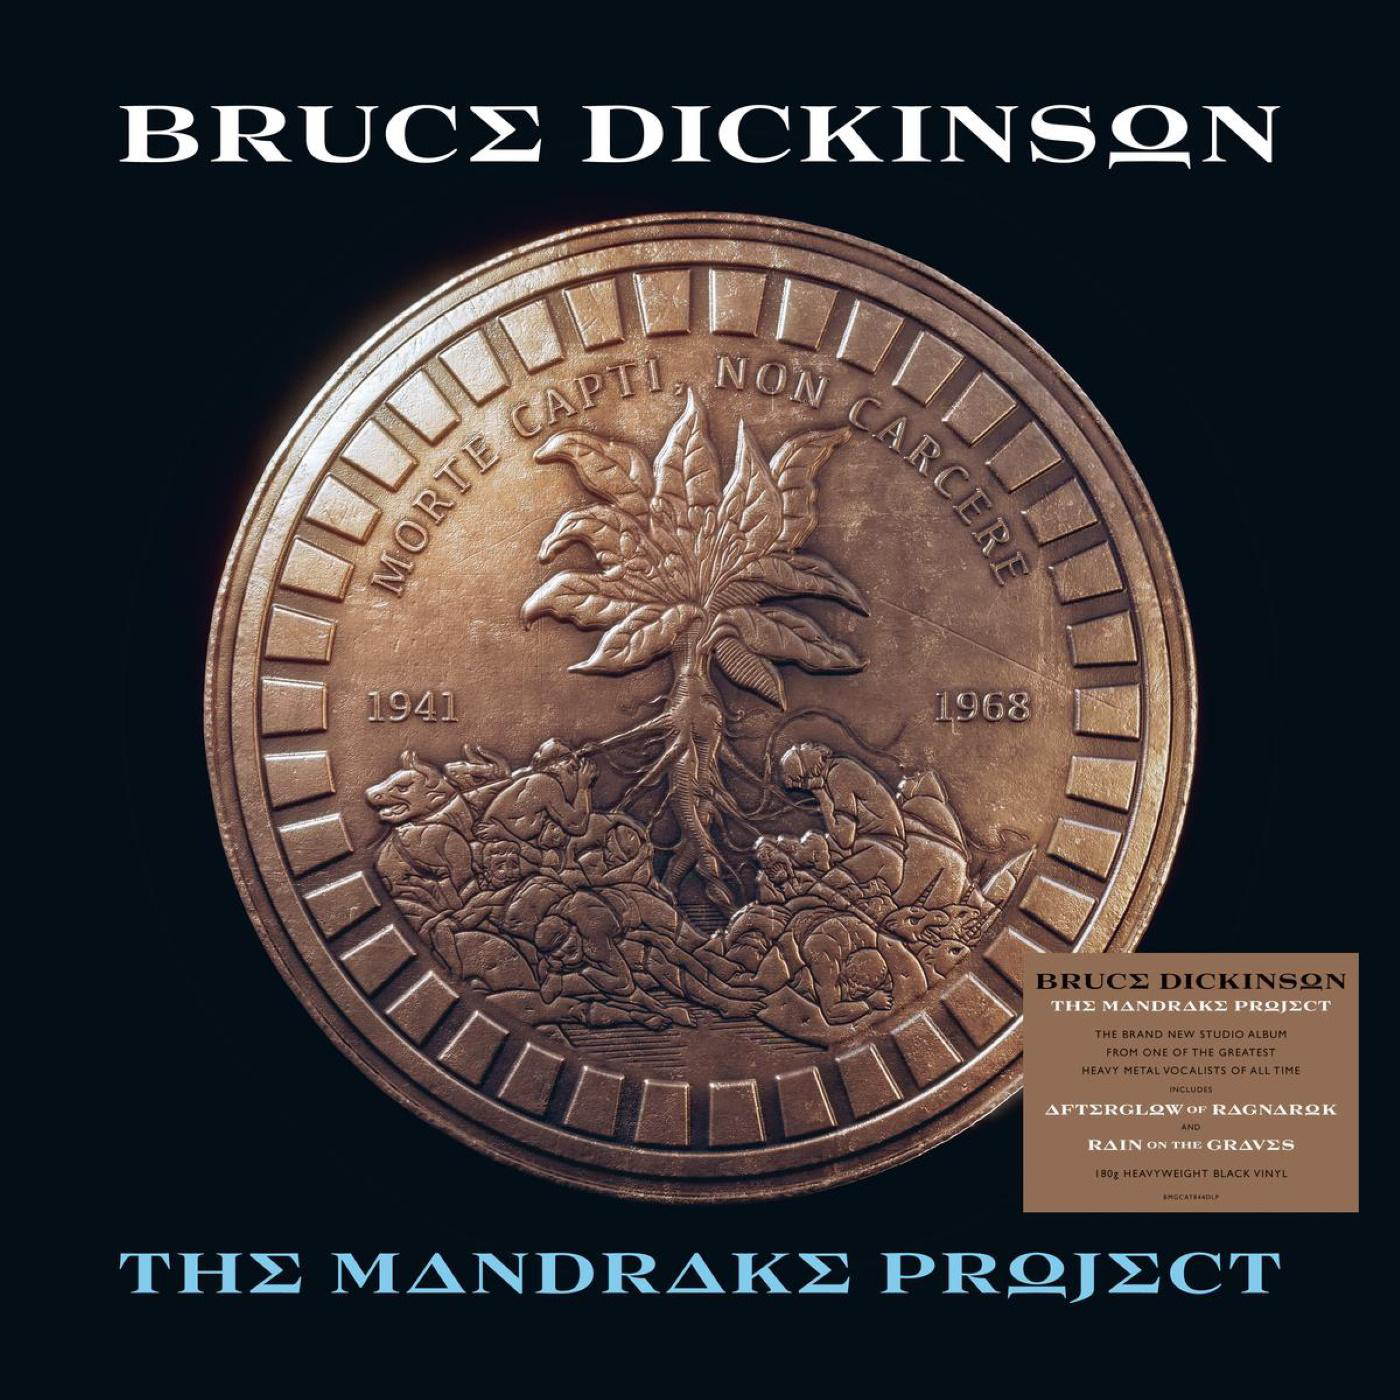 Bruce Dickinson - The Project (Vinyl) - Mandrake